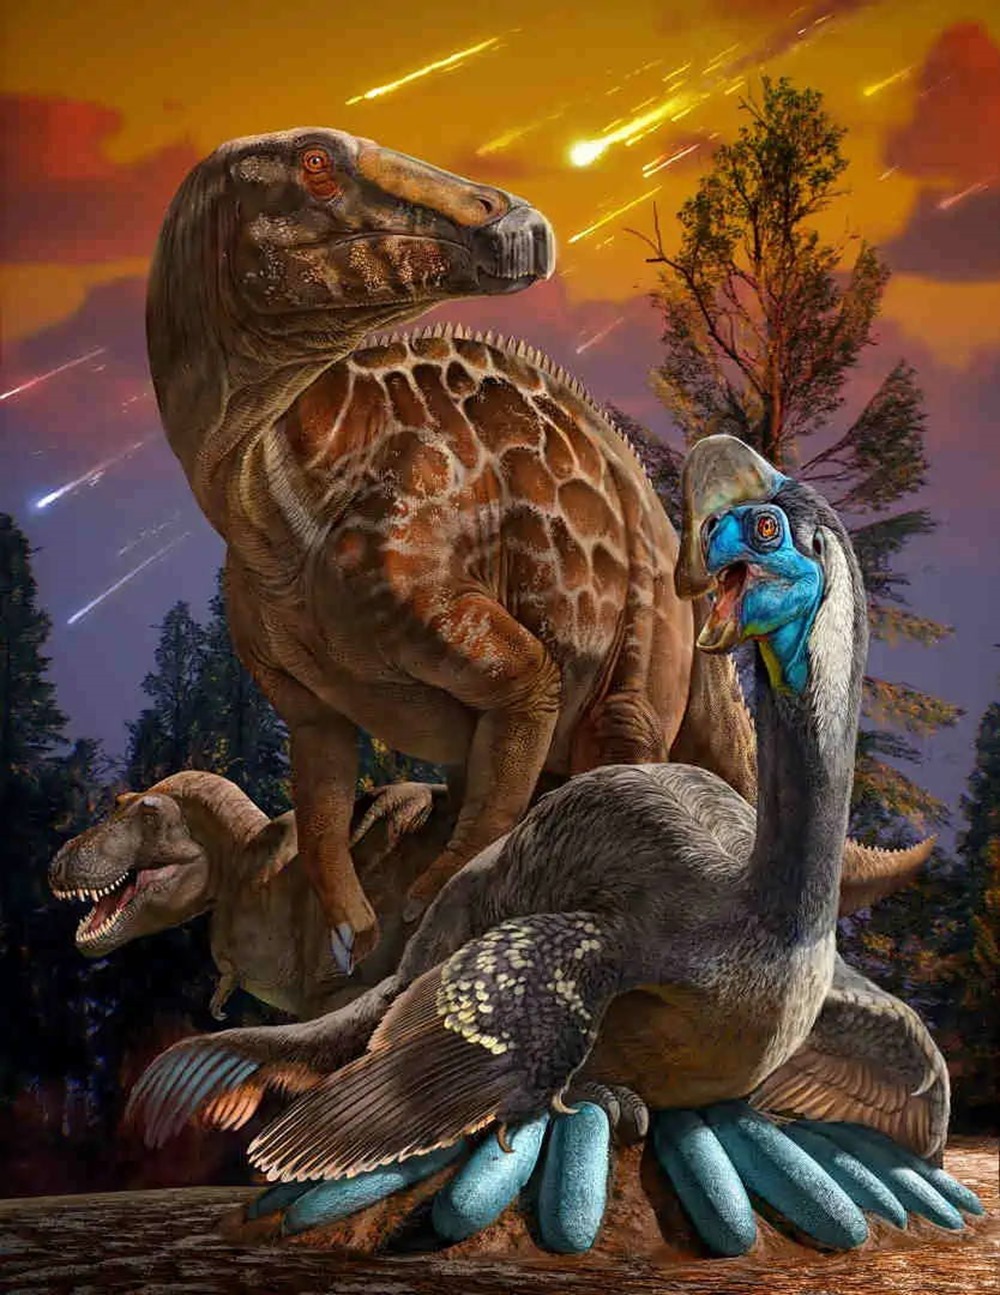 œufs fossiles extinction dinosaure 1 22